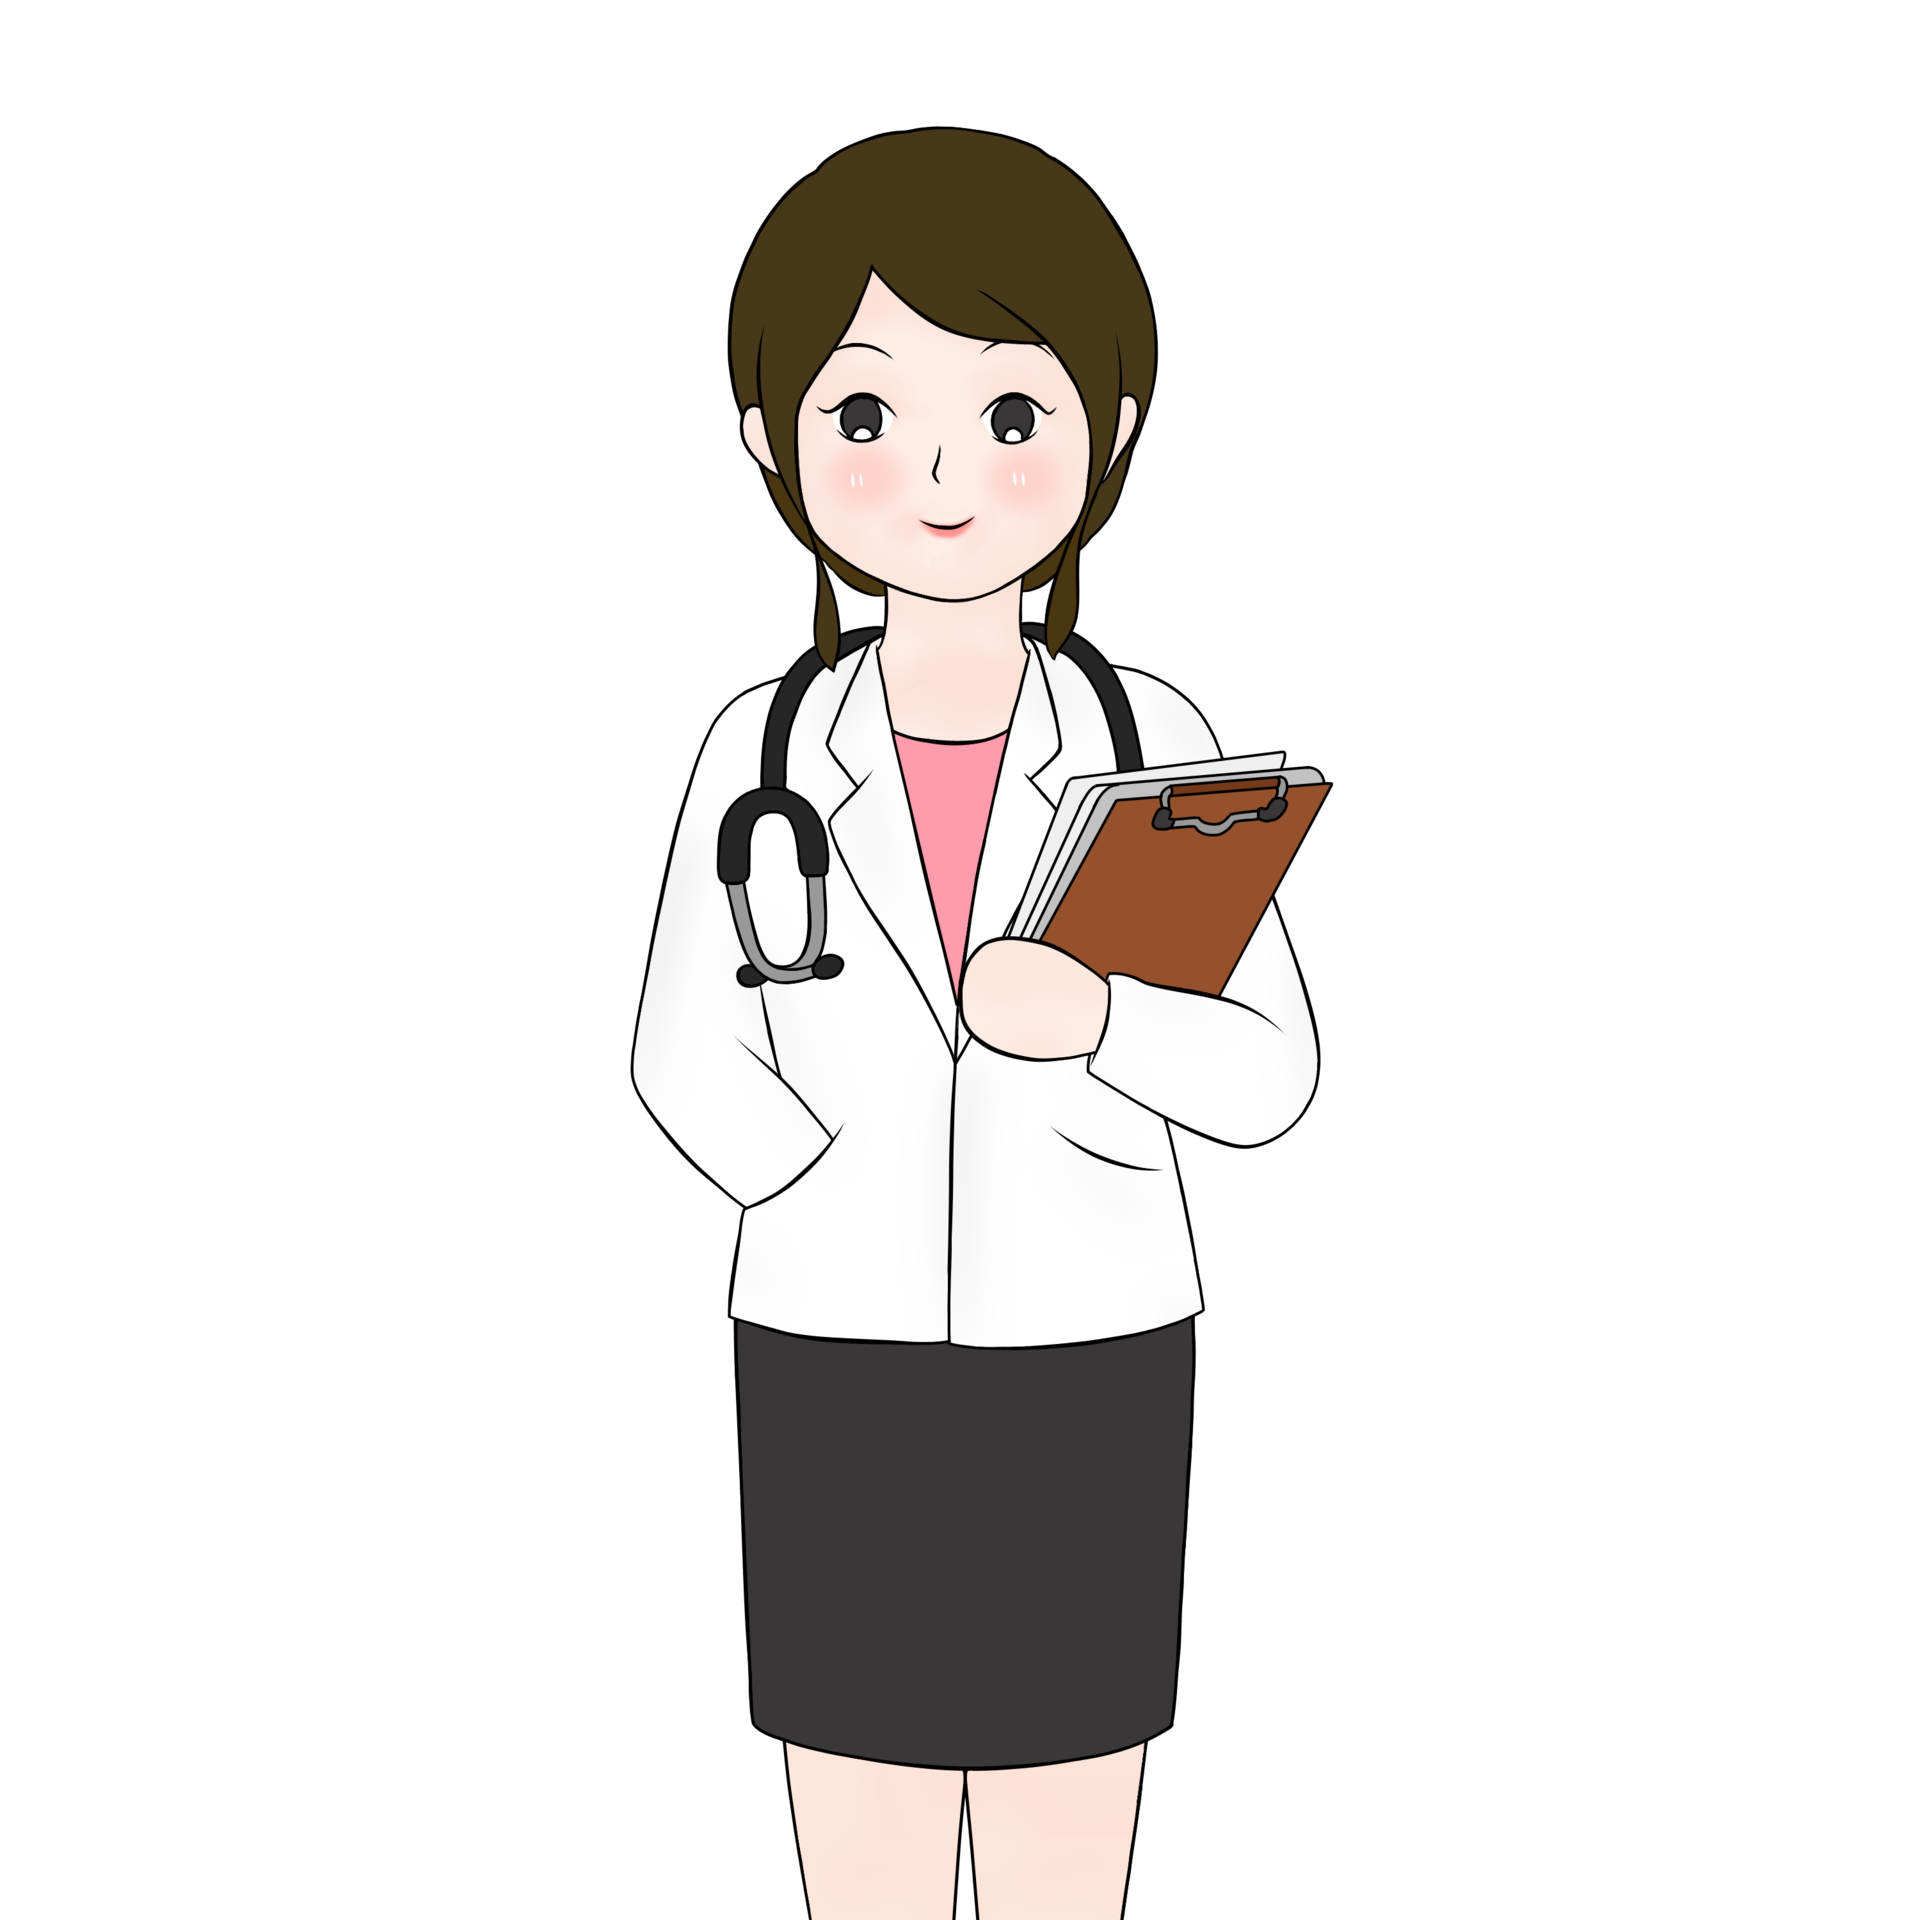 cartoon woman doctor